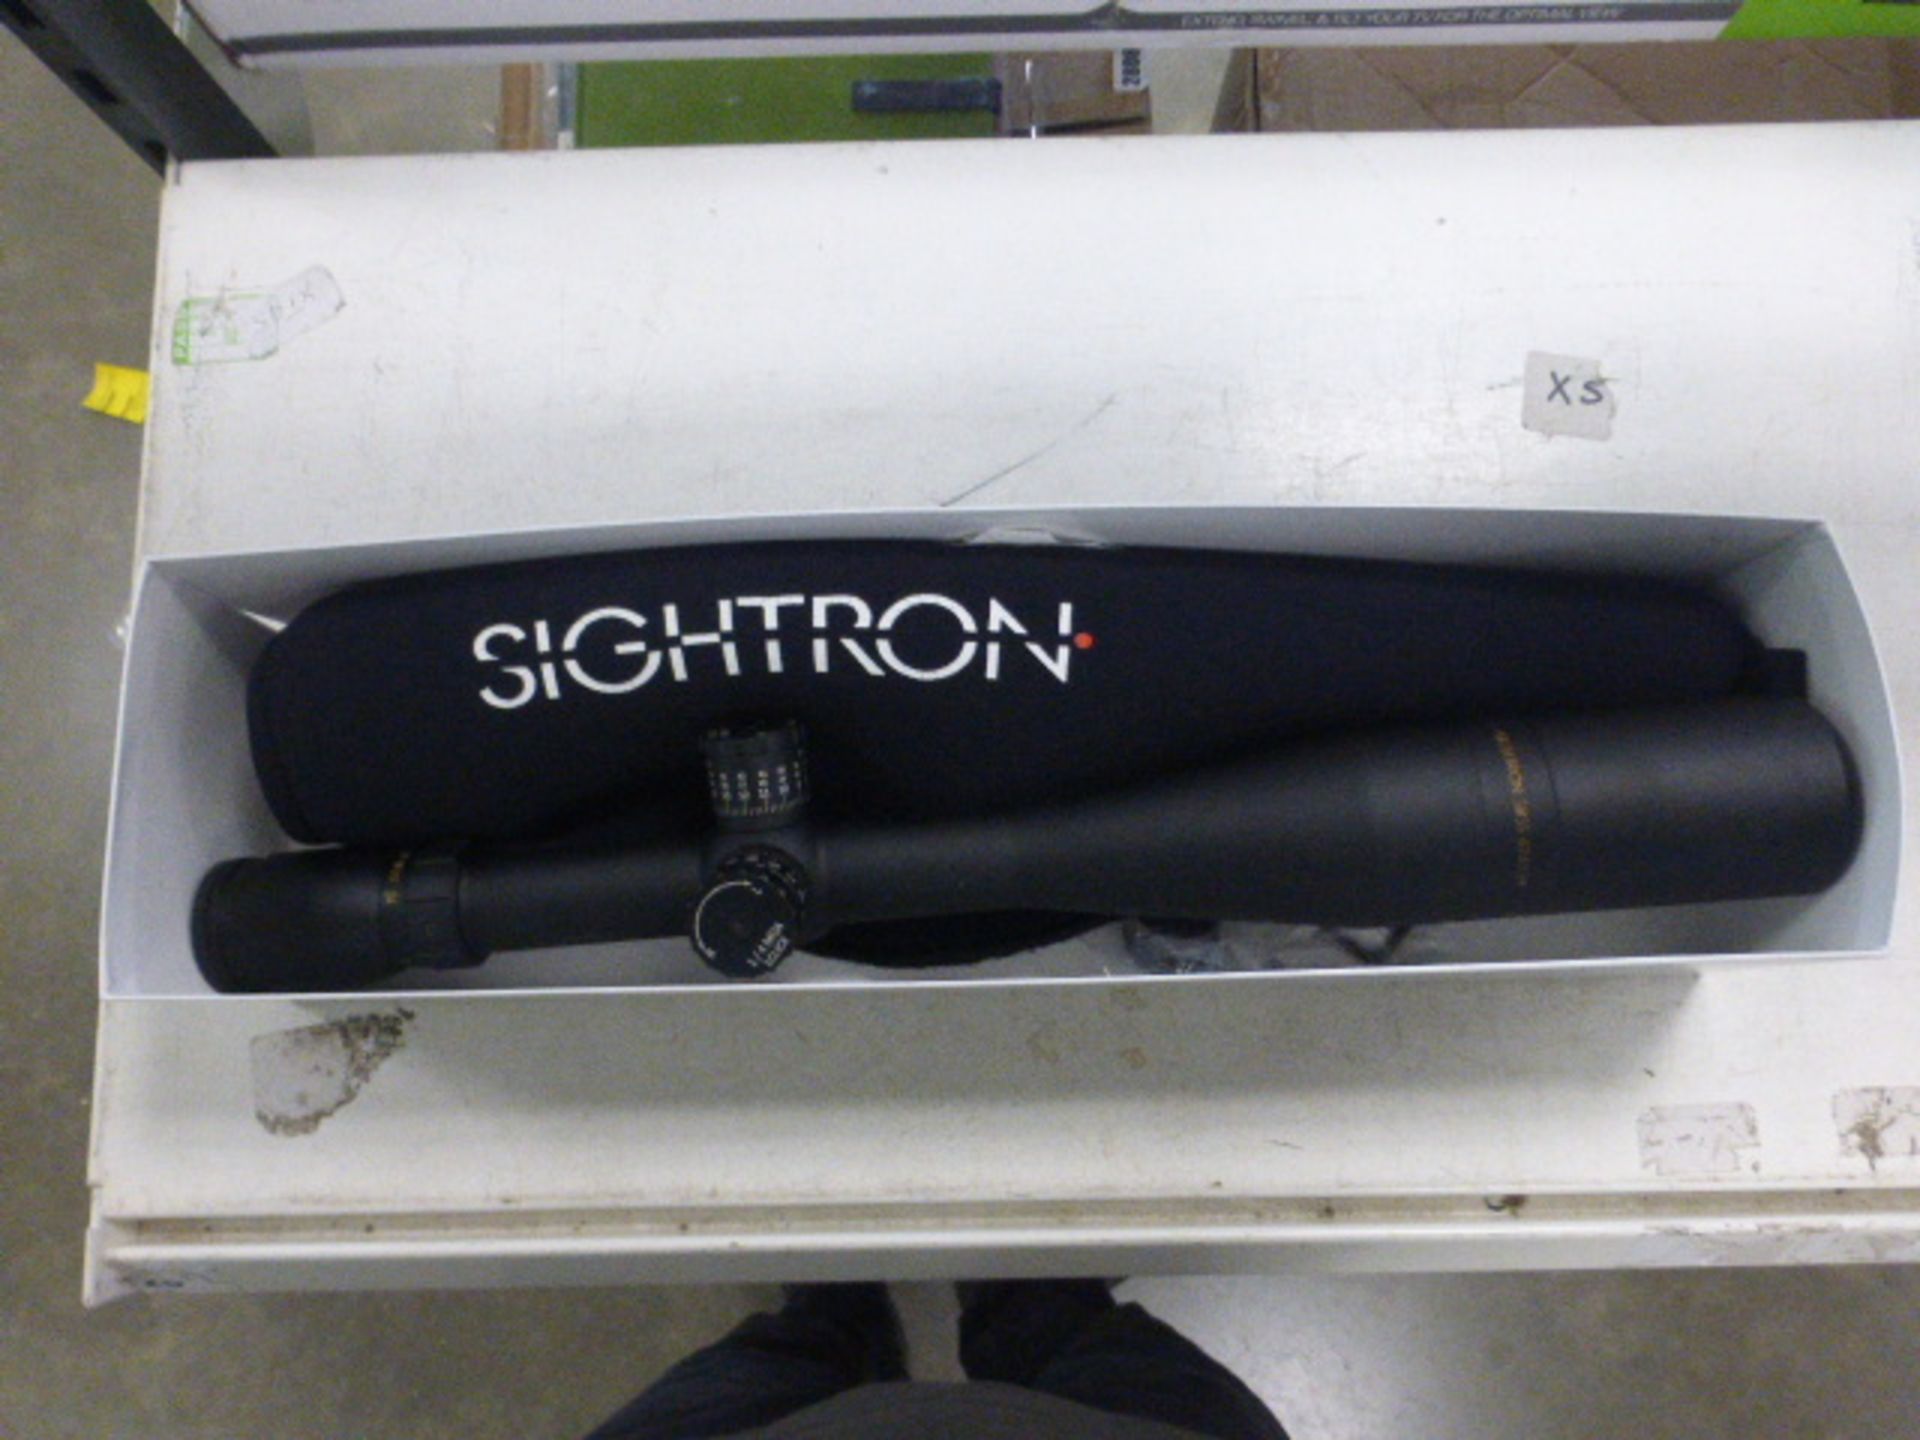 S111 Series Citron scope/sight in box